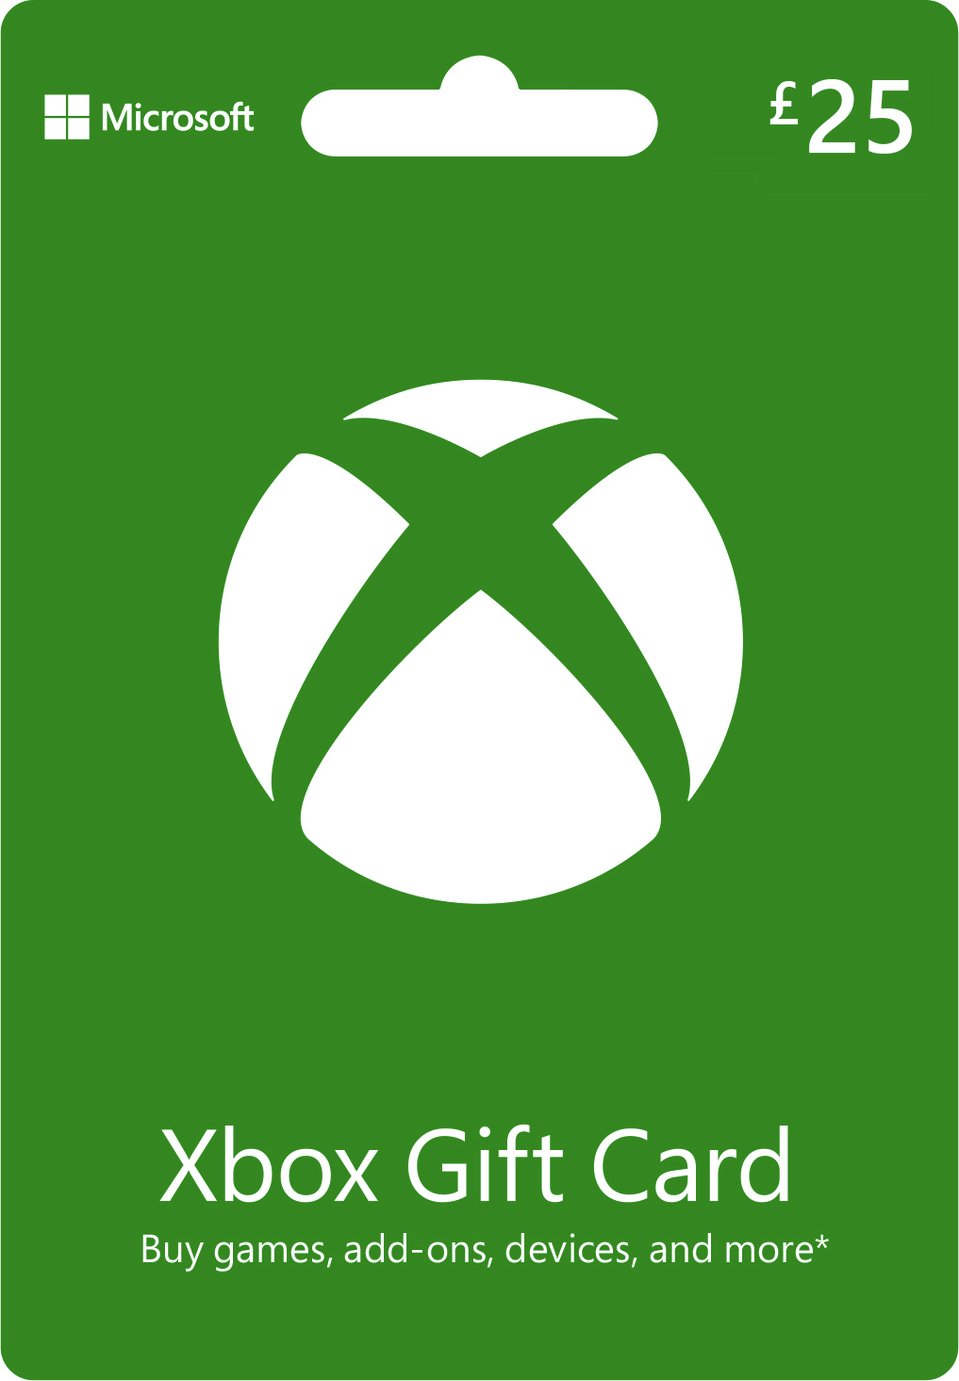 can u buy v bucks with xbox gift card